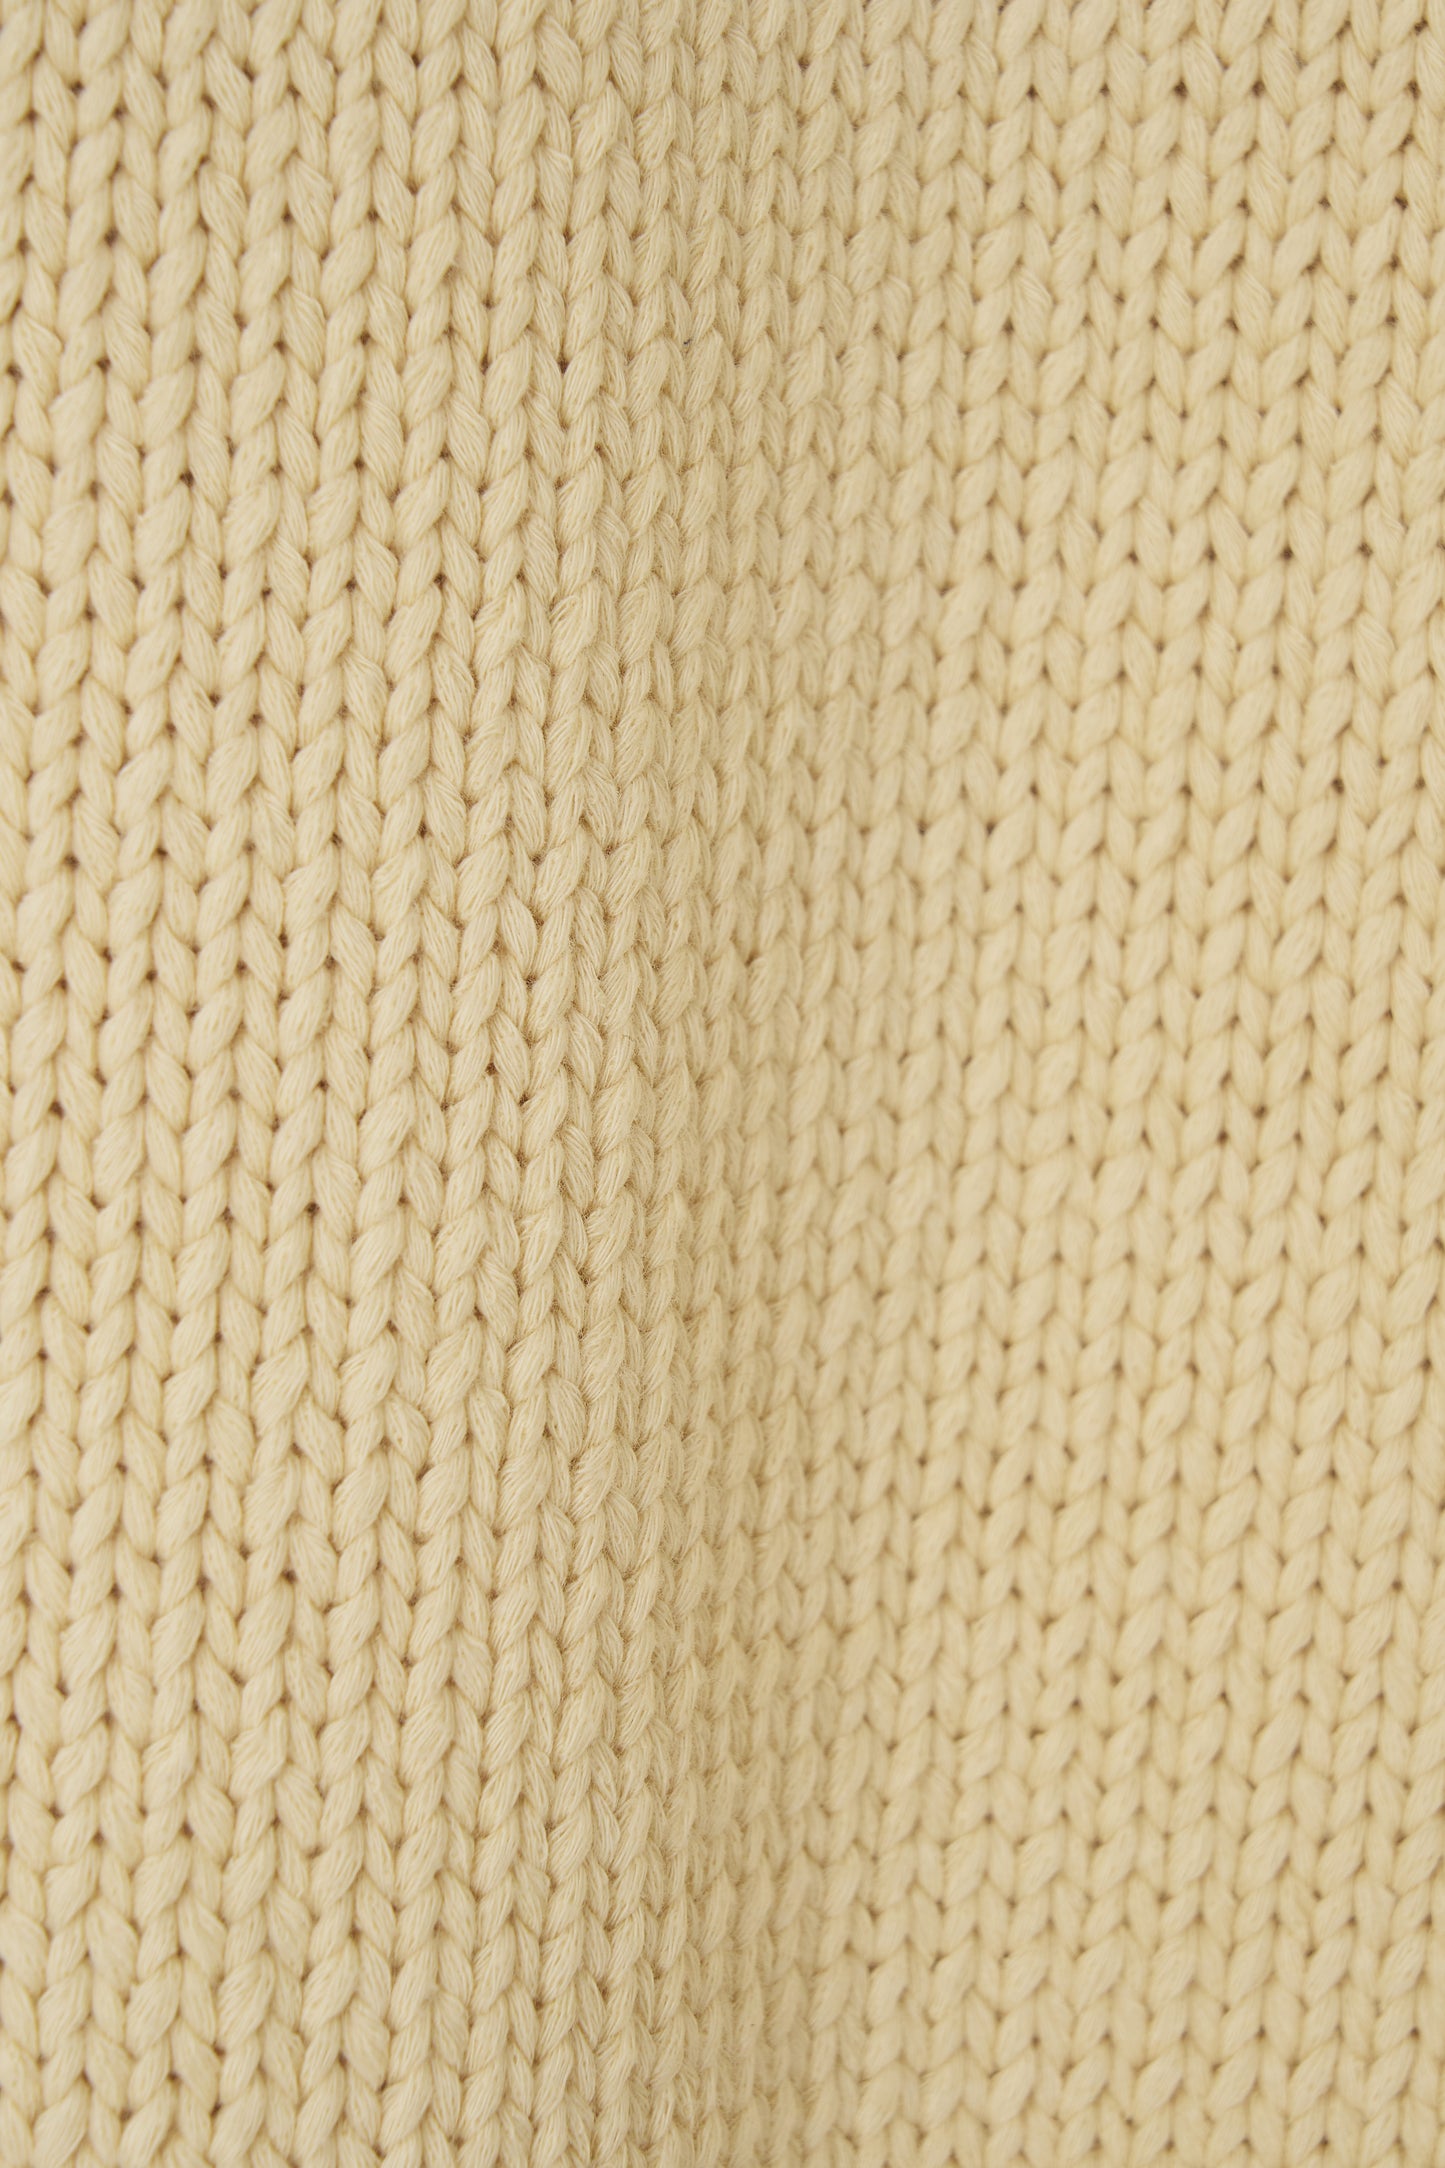 Camero knit